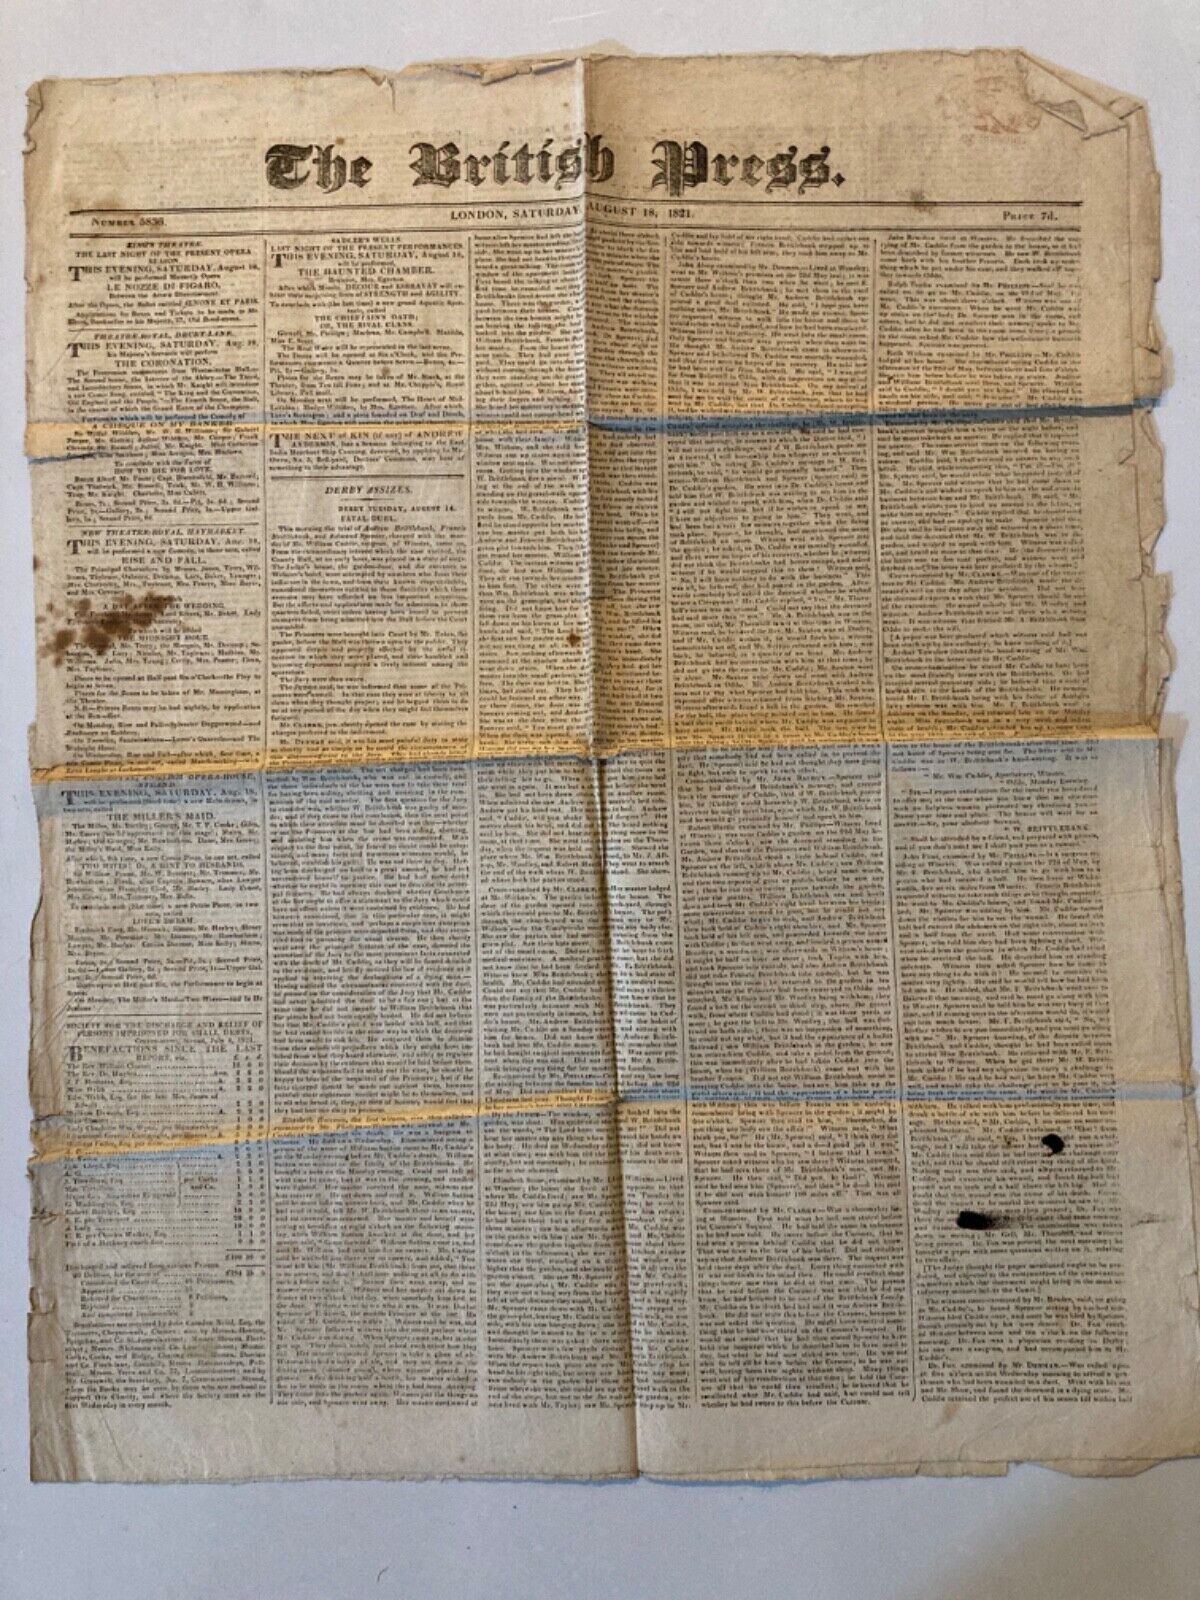 The British Press London August 18, 1821 Newspaper